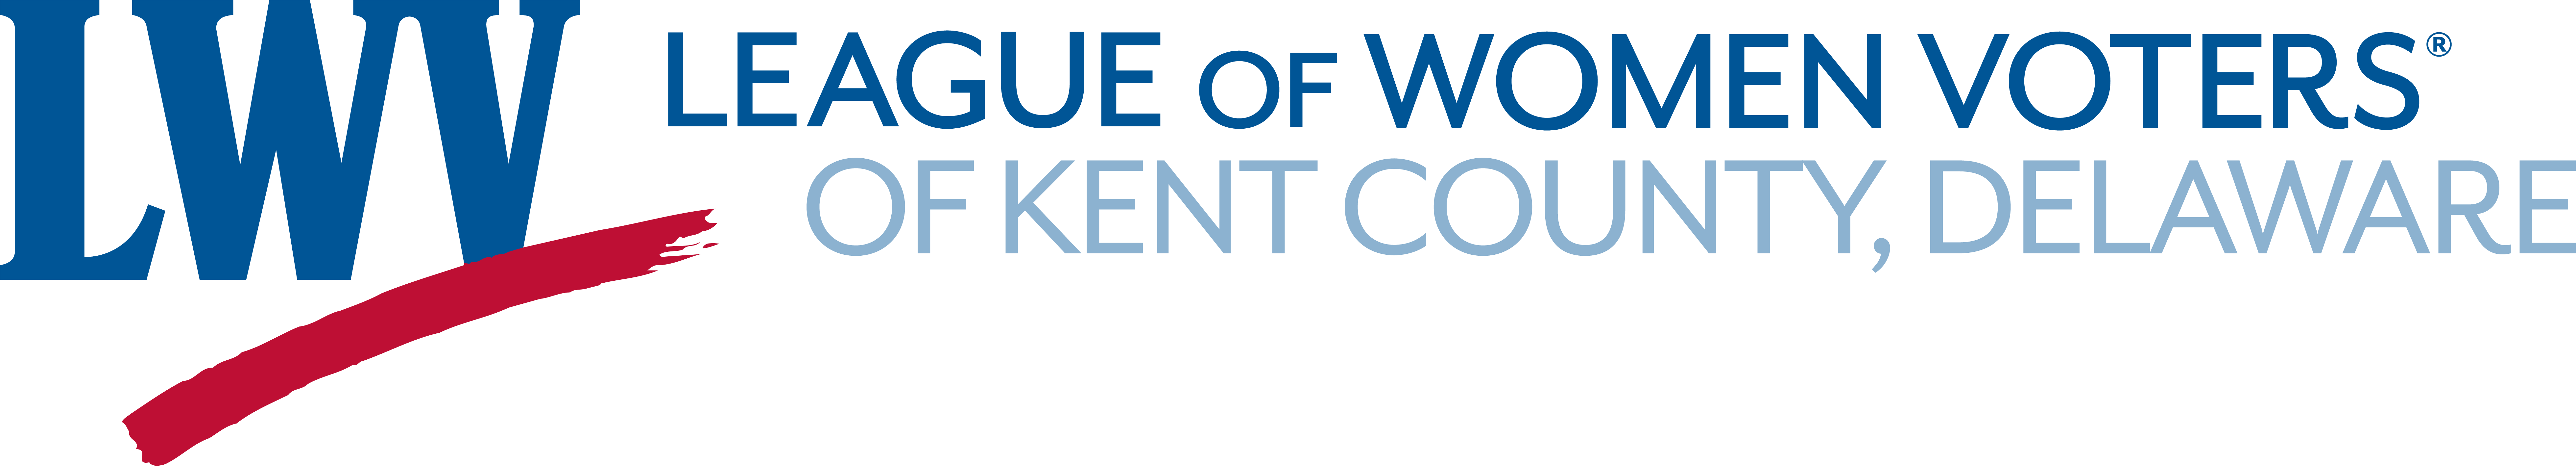 League of Women Voters of Kent County, DE logo